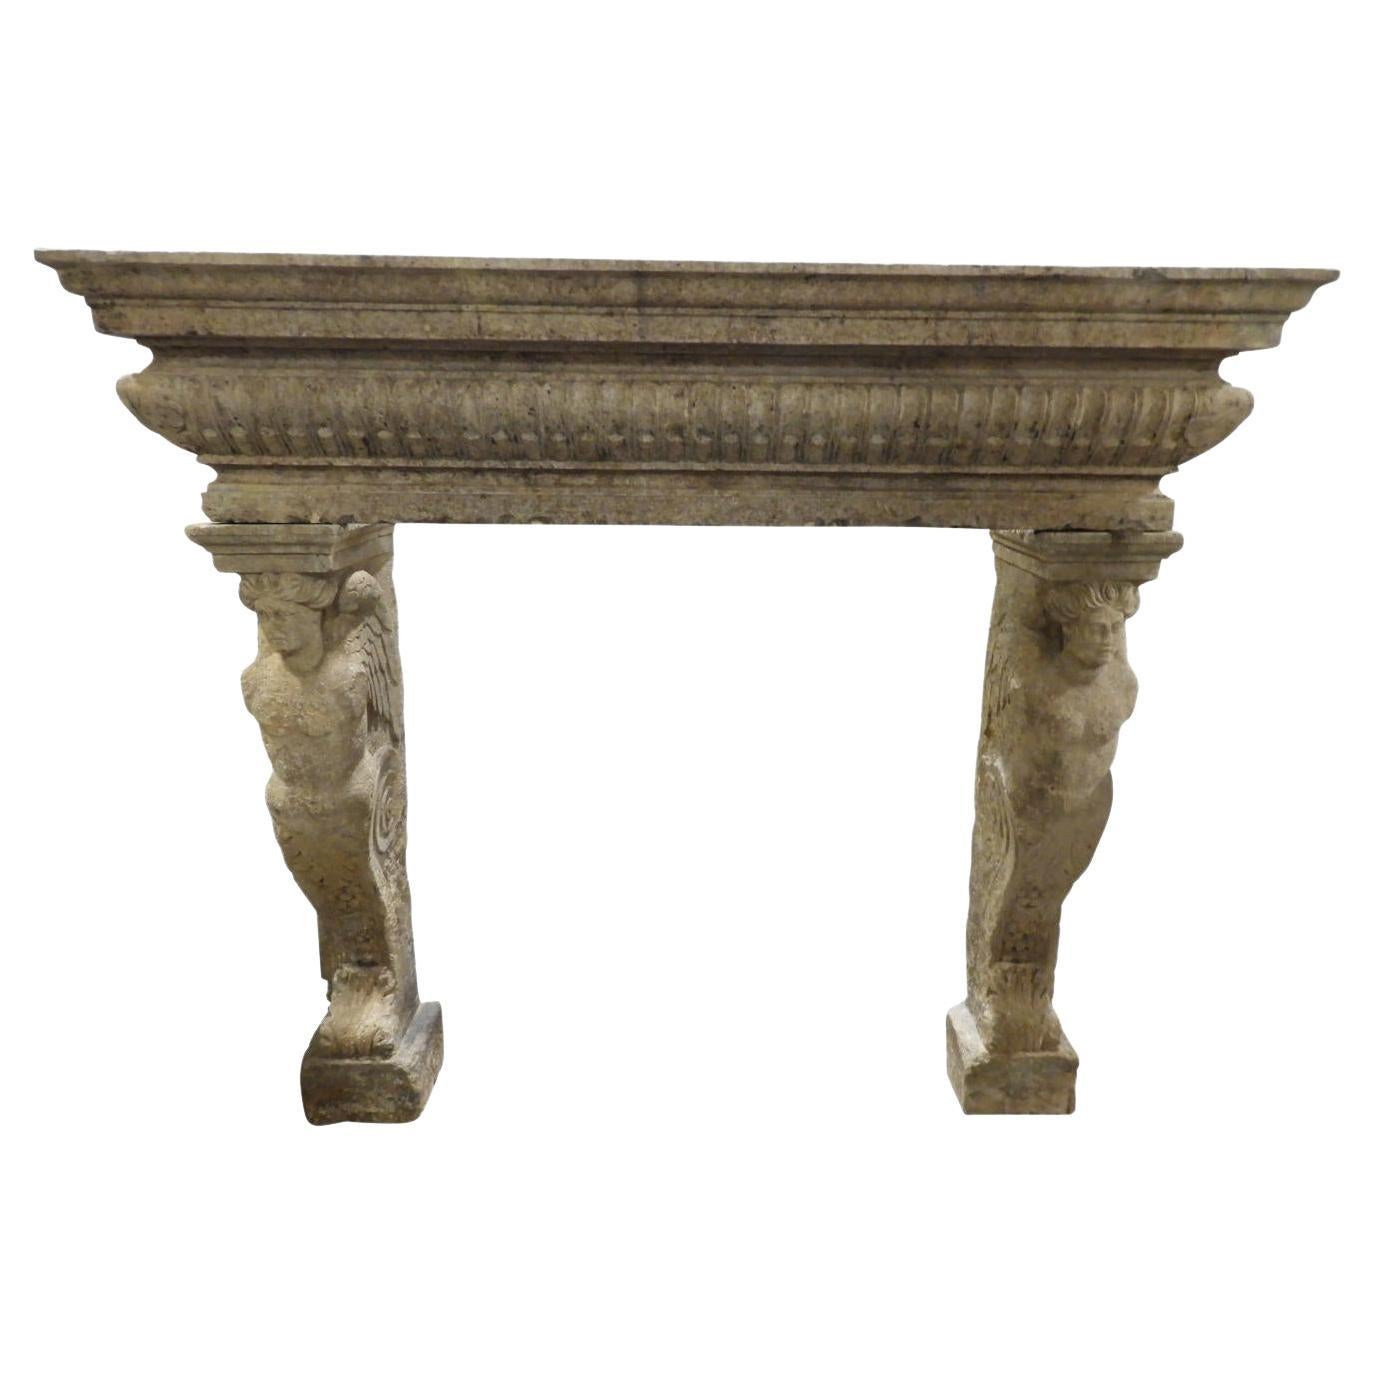 Impressive 17th Century Italian Renaissance Limestone Fireplace with Caryatids For Sale